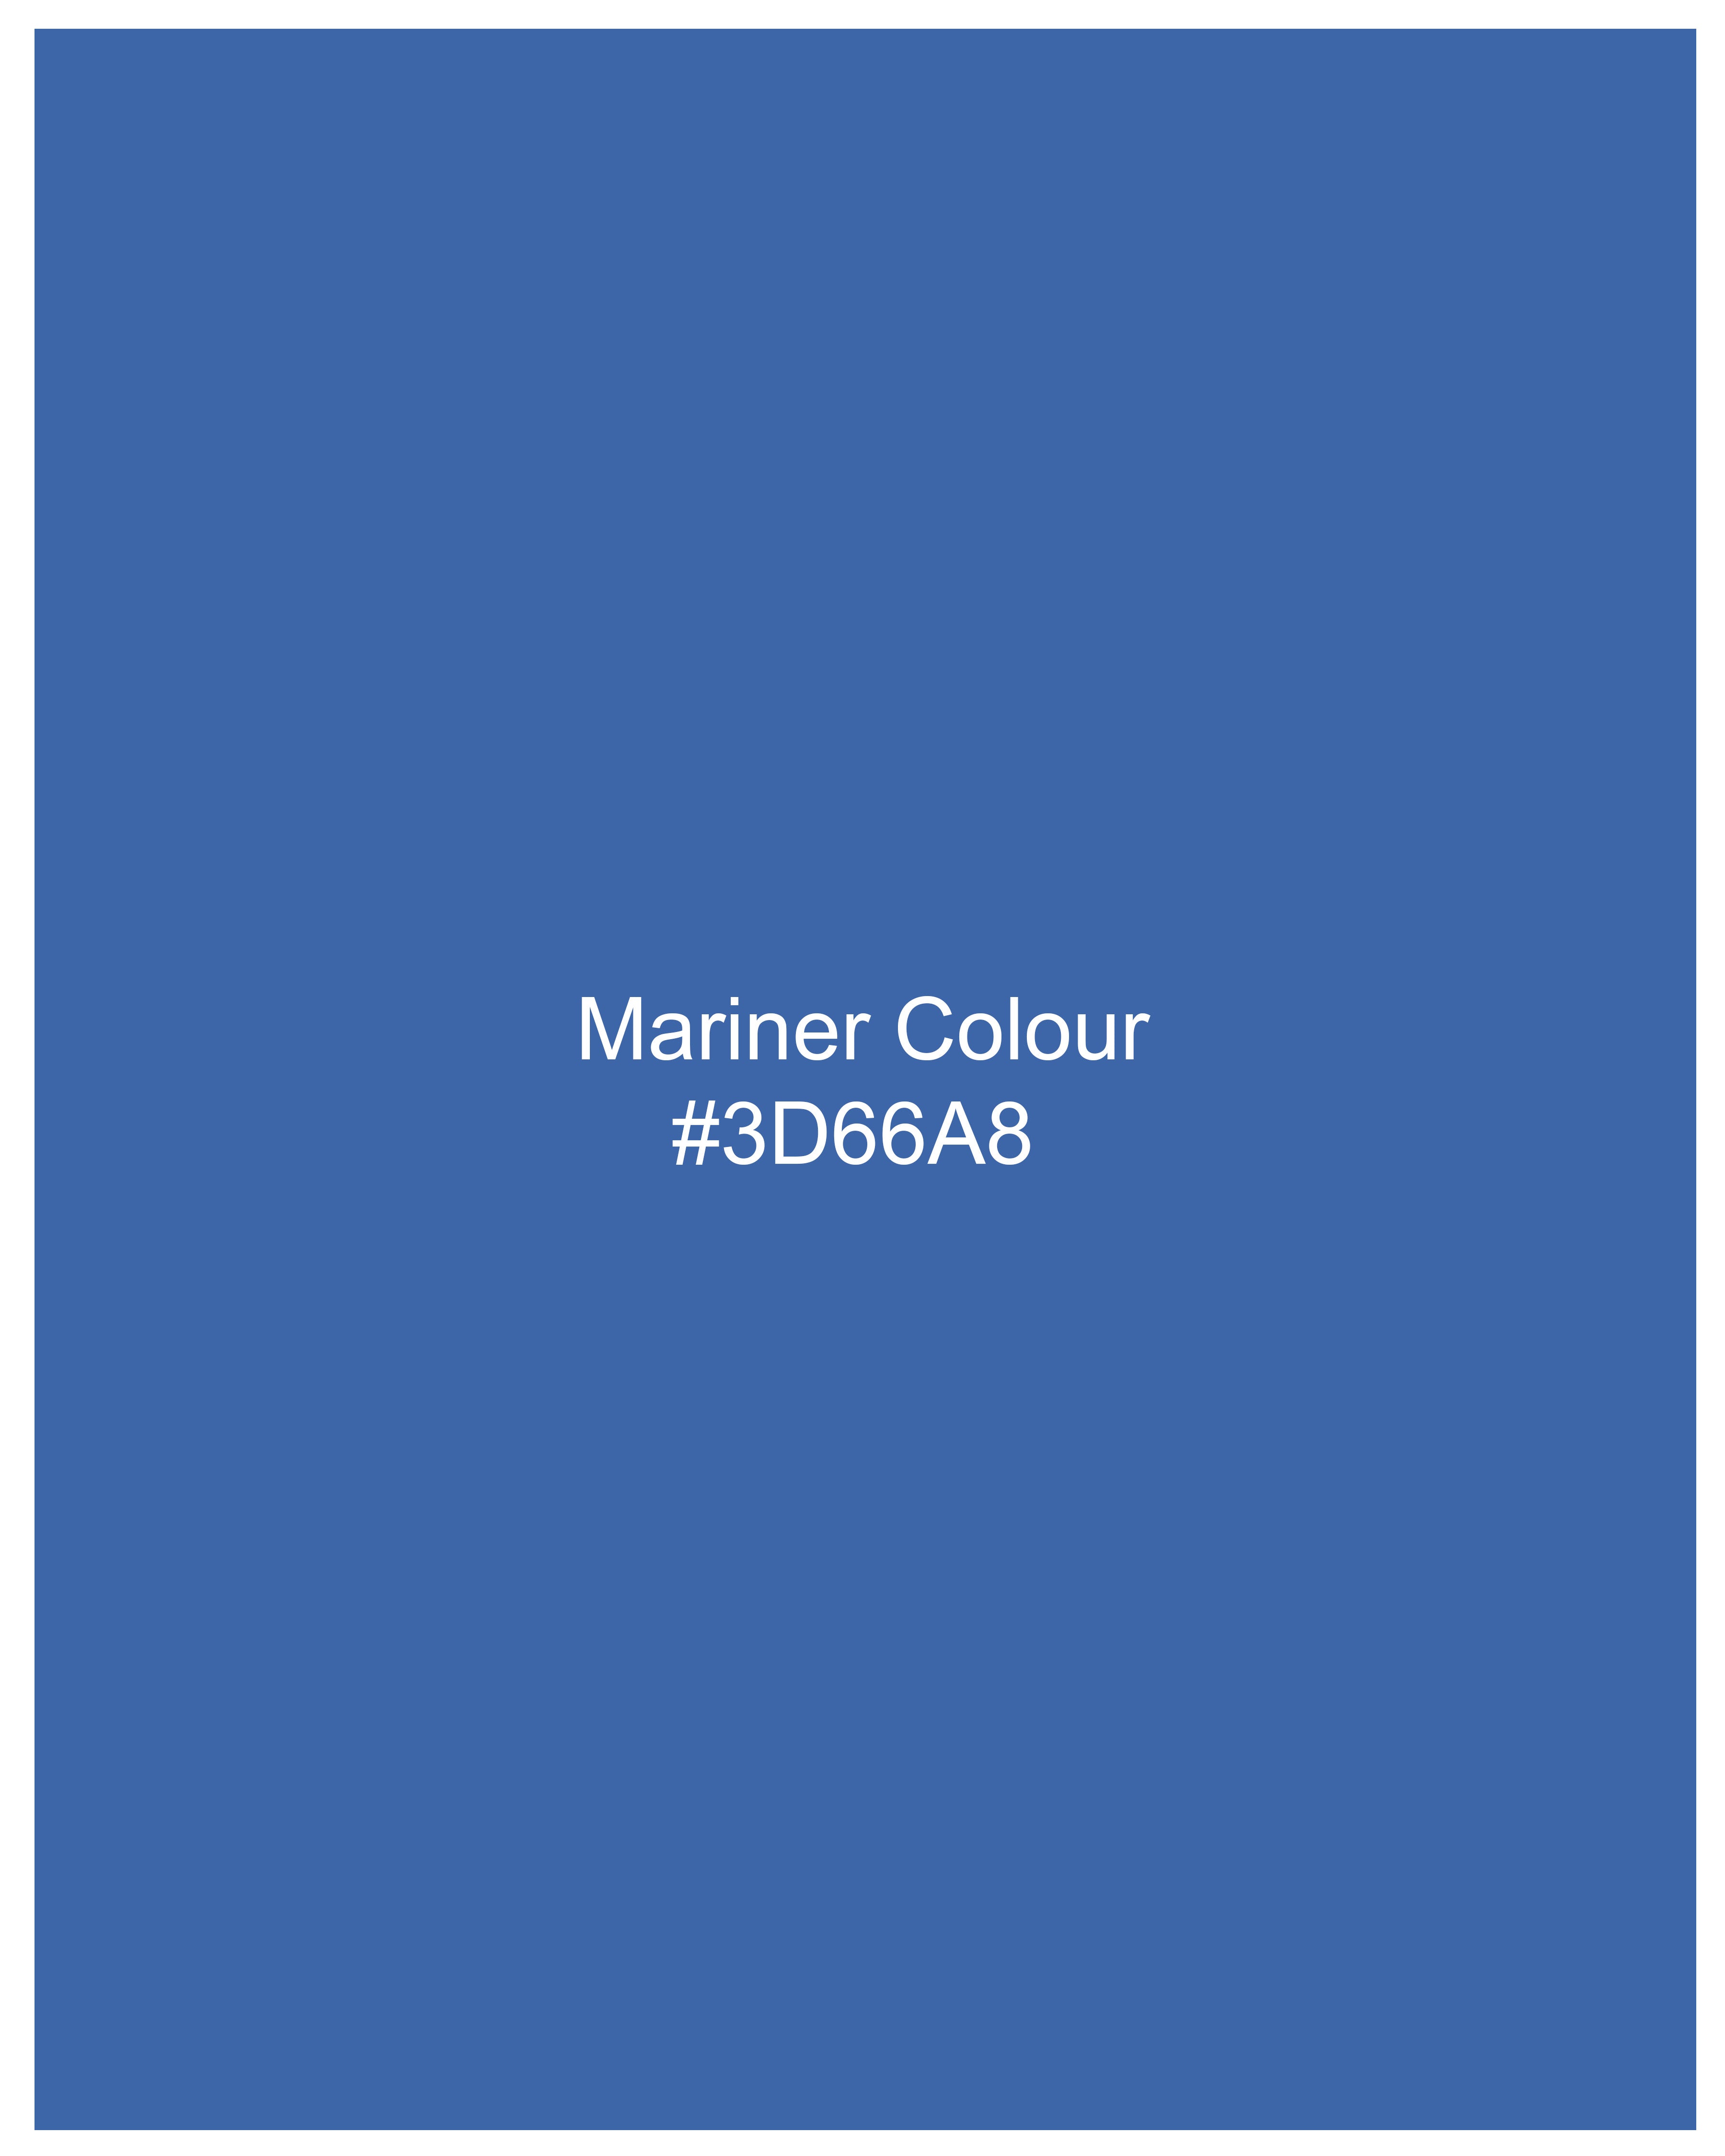 Mariner Blue Checkered Premium Cotton Shirt  8623-CA-38,8623-CA-H-38,8623-CA-39,8623-CA-H-39,8623-CA-40,8623-CA-H-40,8623-CA-42,8623-CA-H-42,8623-CA-44,8623-CA-H-44,8623-CA-46,8623-CA-H-46,8623-CA-48,8623-CA-H-48,8623-CA-50,8623-CA-H-50,8623-CA-52,8623-CA-H-52